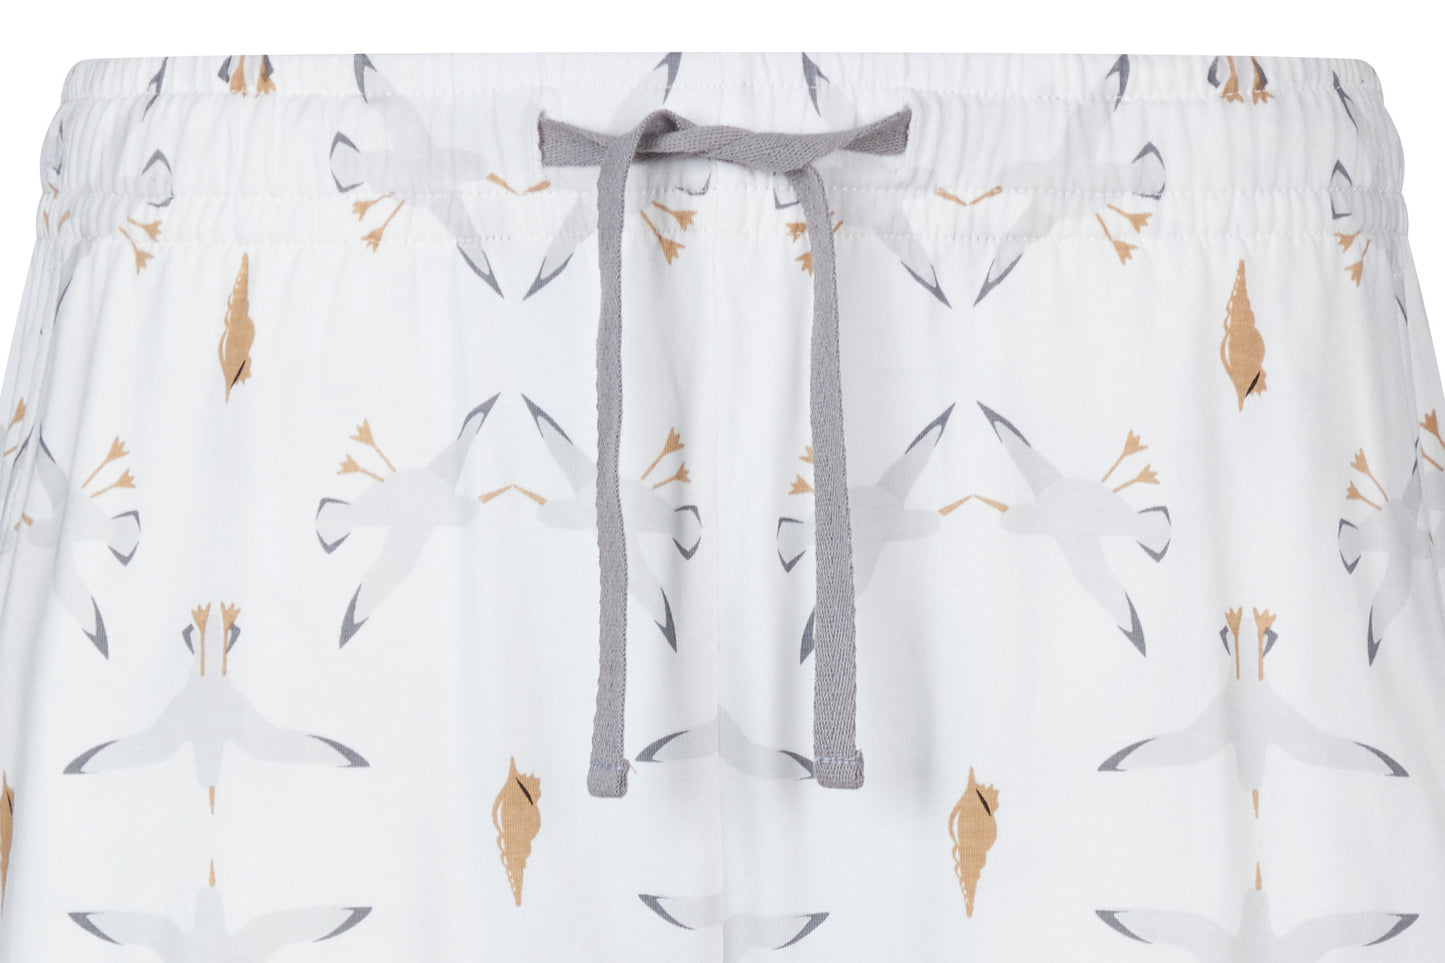 Women's Short Sleeve PJ Set (Bamboo Jersey) - Seagulls & Seashells